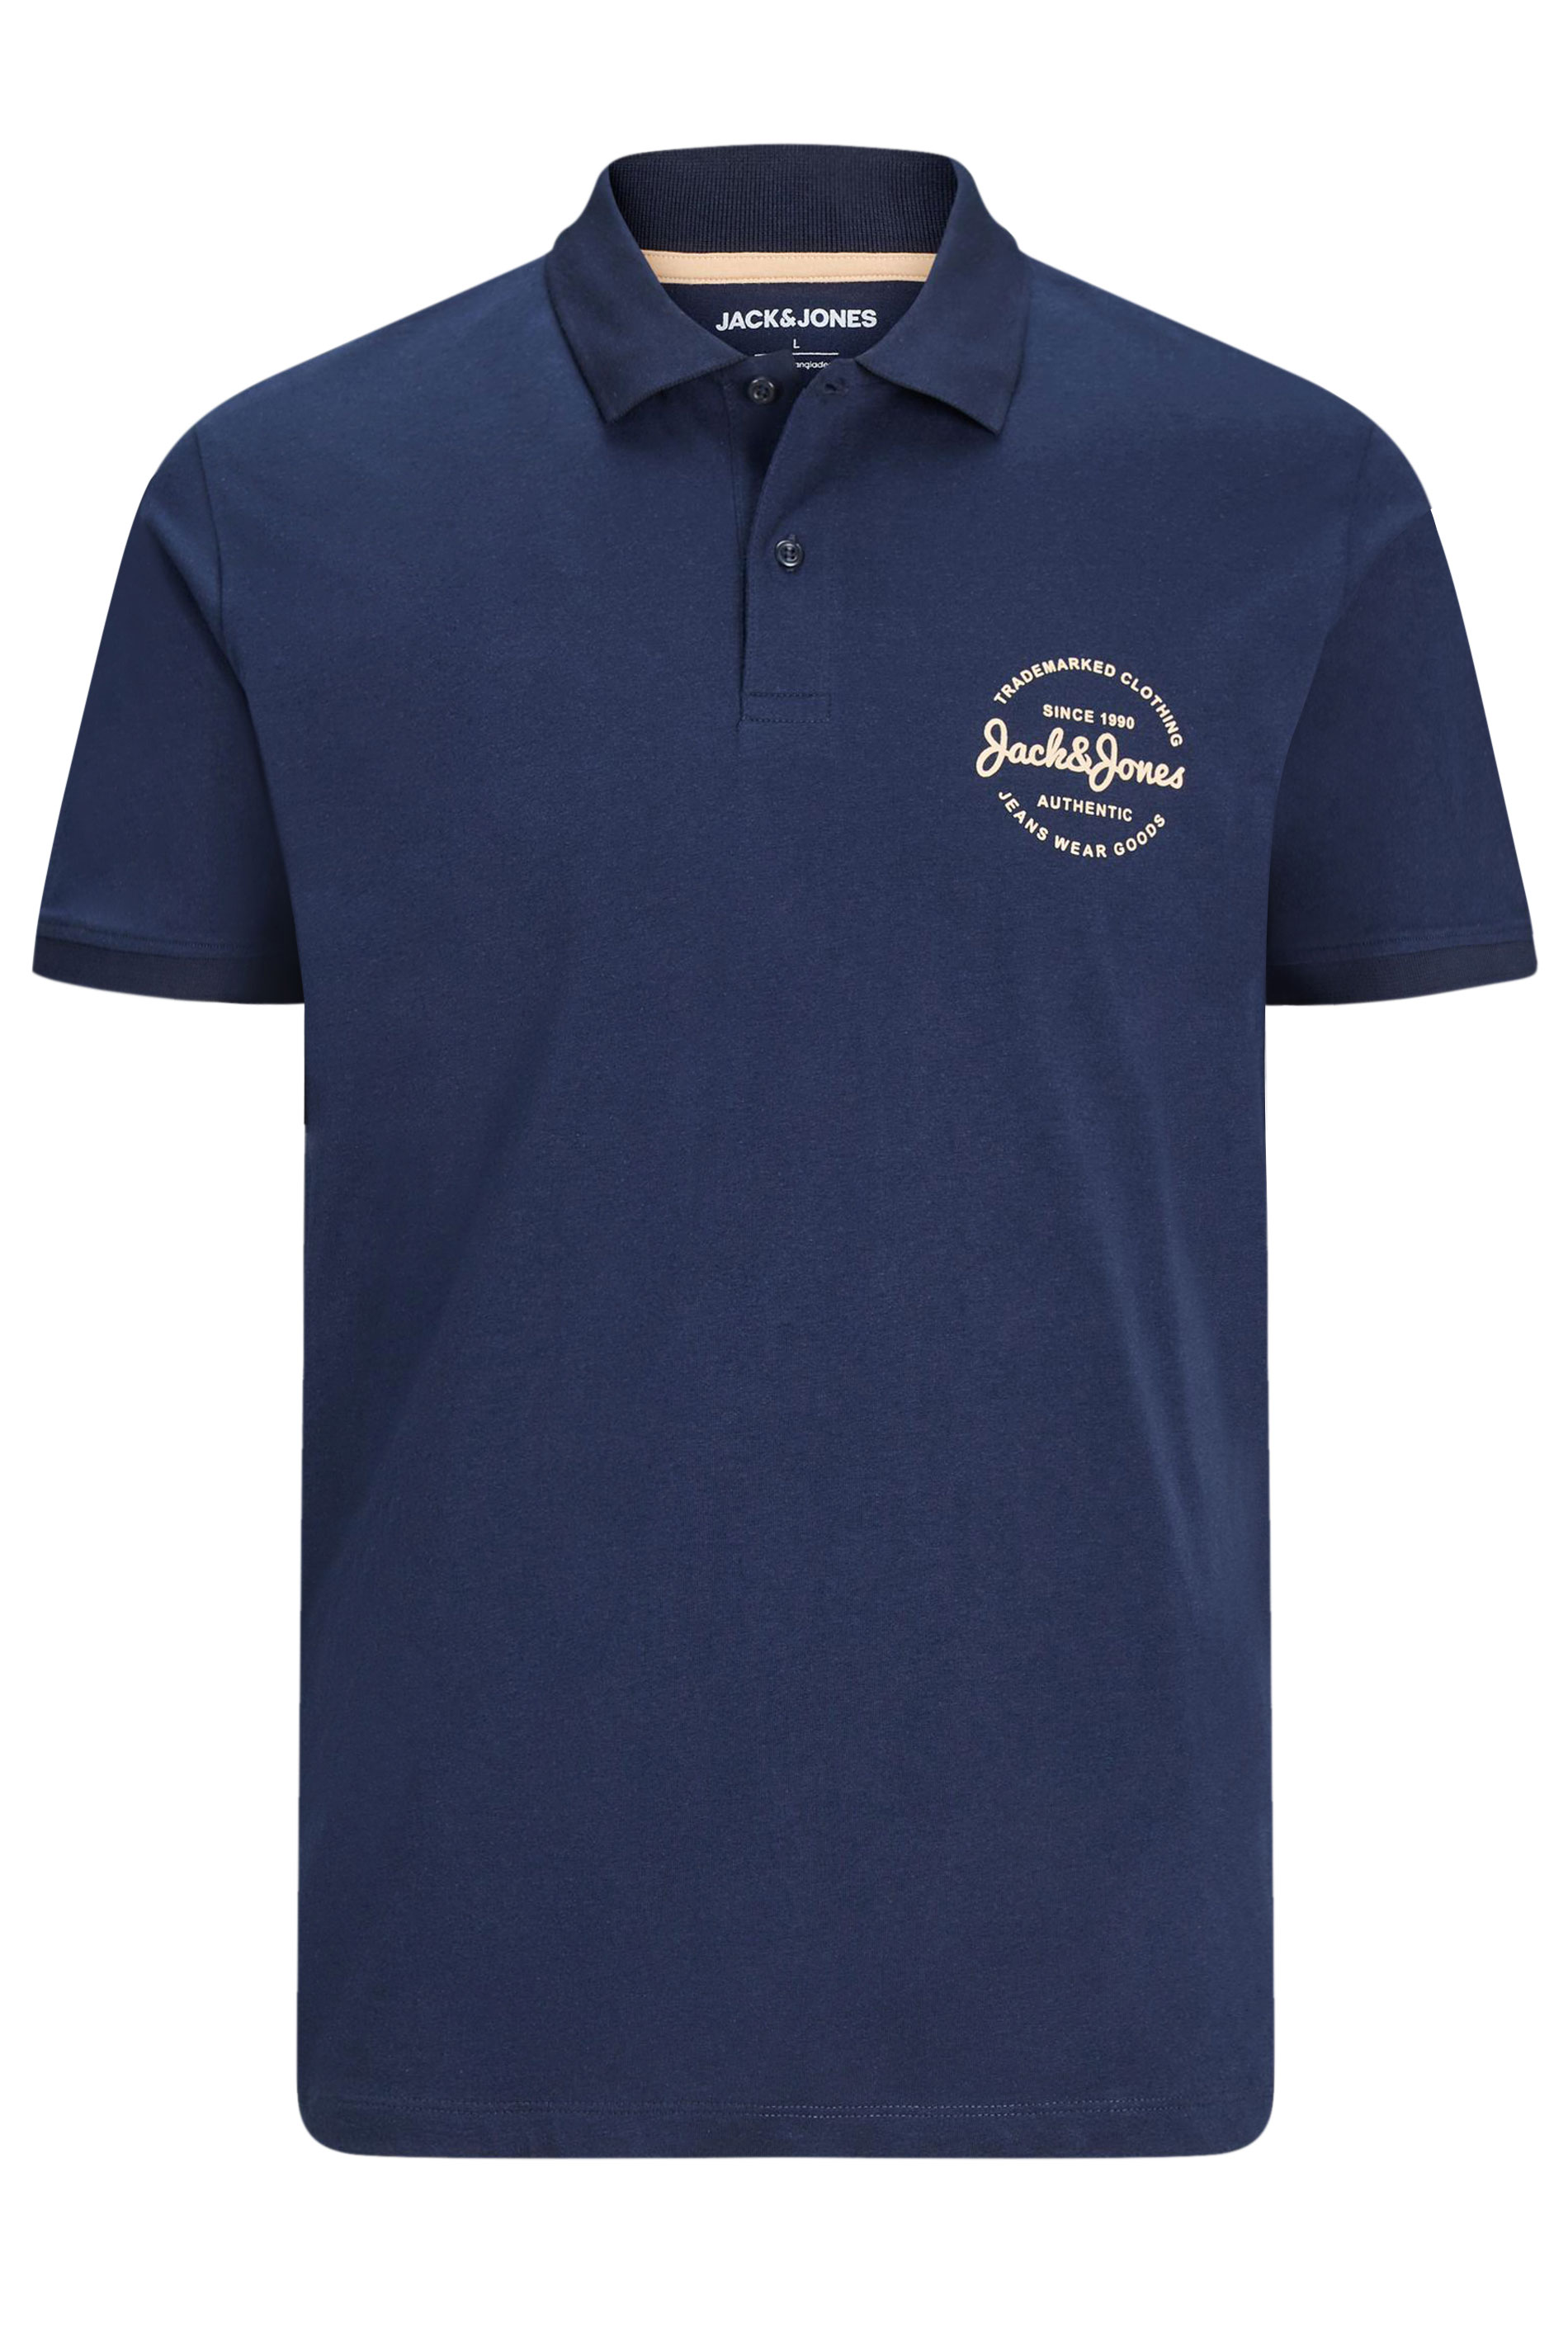 JACK & JONES Navy Blue Short Sleeve Polo Shirt | BadRhino 2